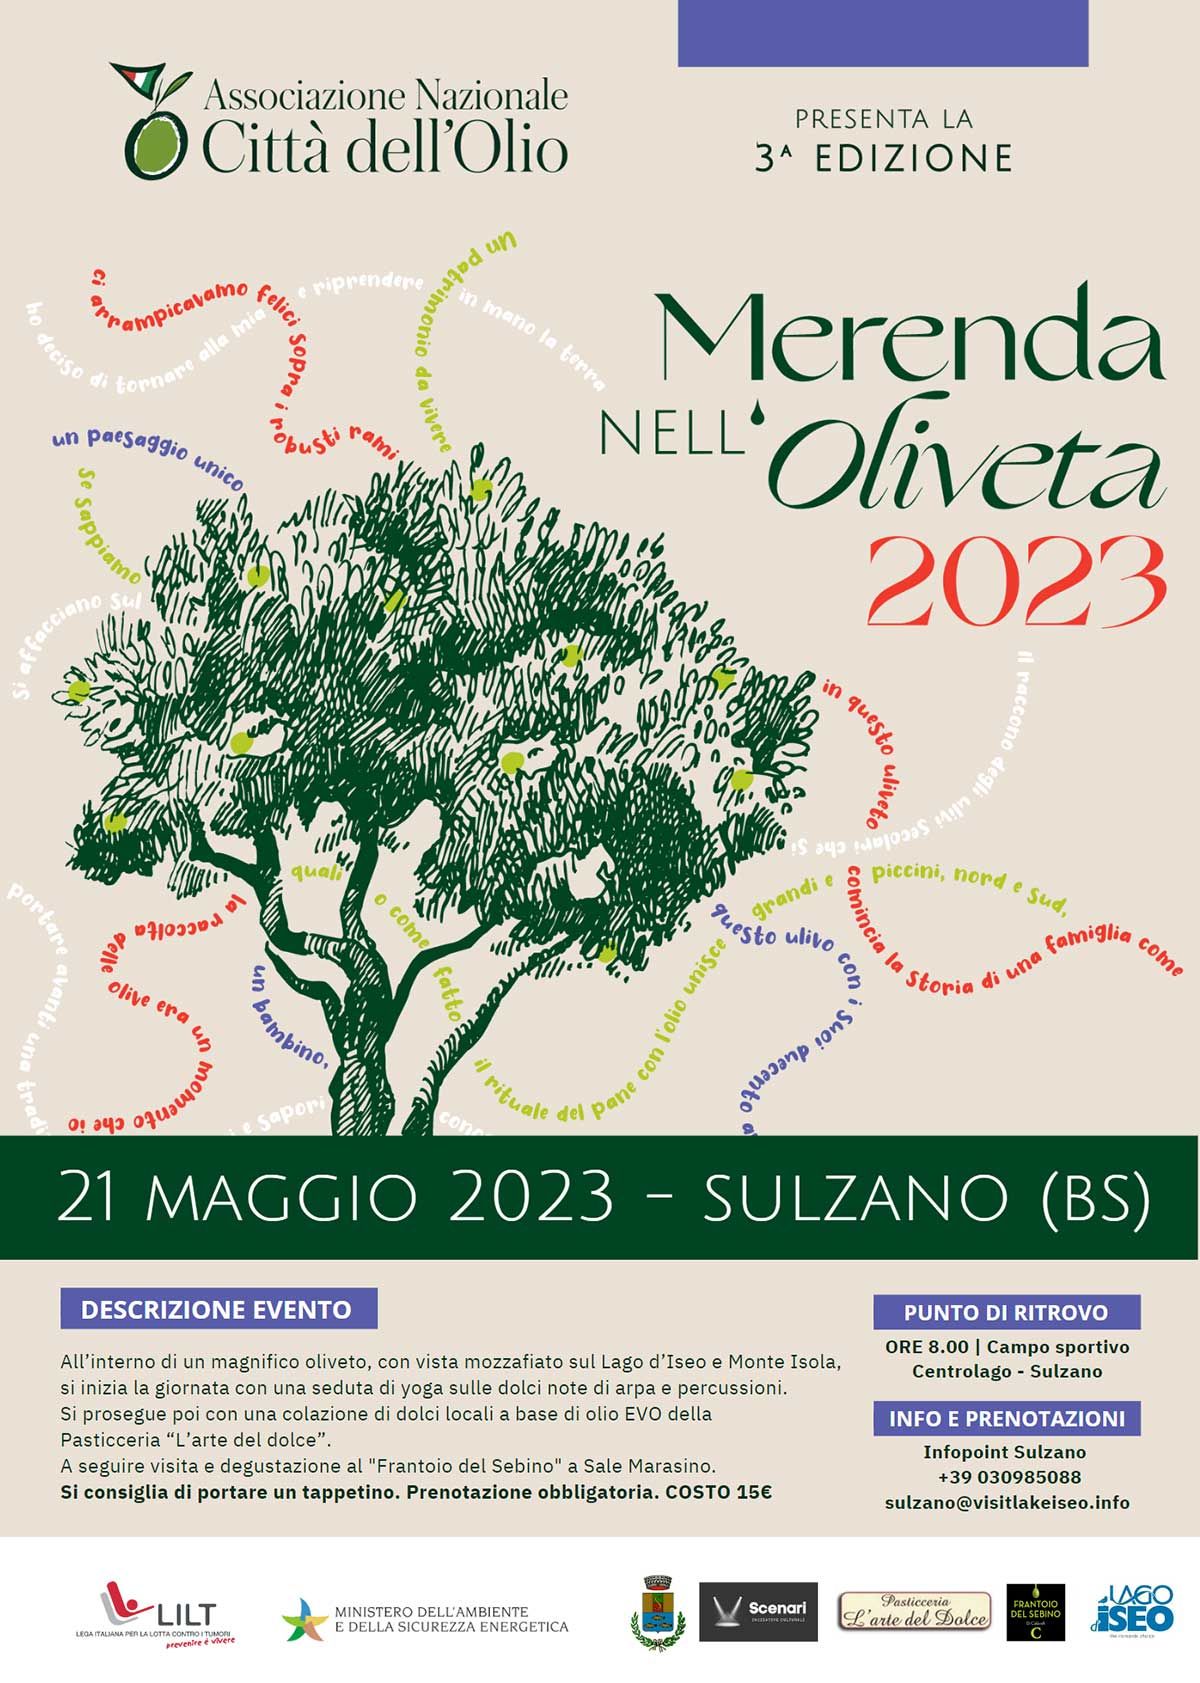 sulzano-Merenda-oliveta-2023